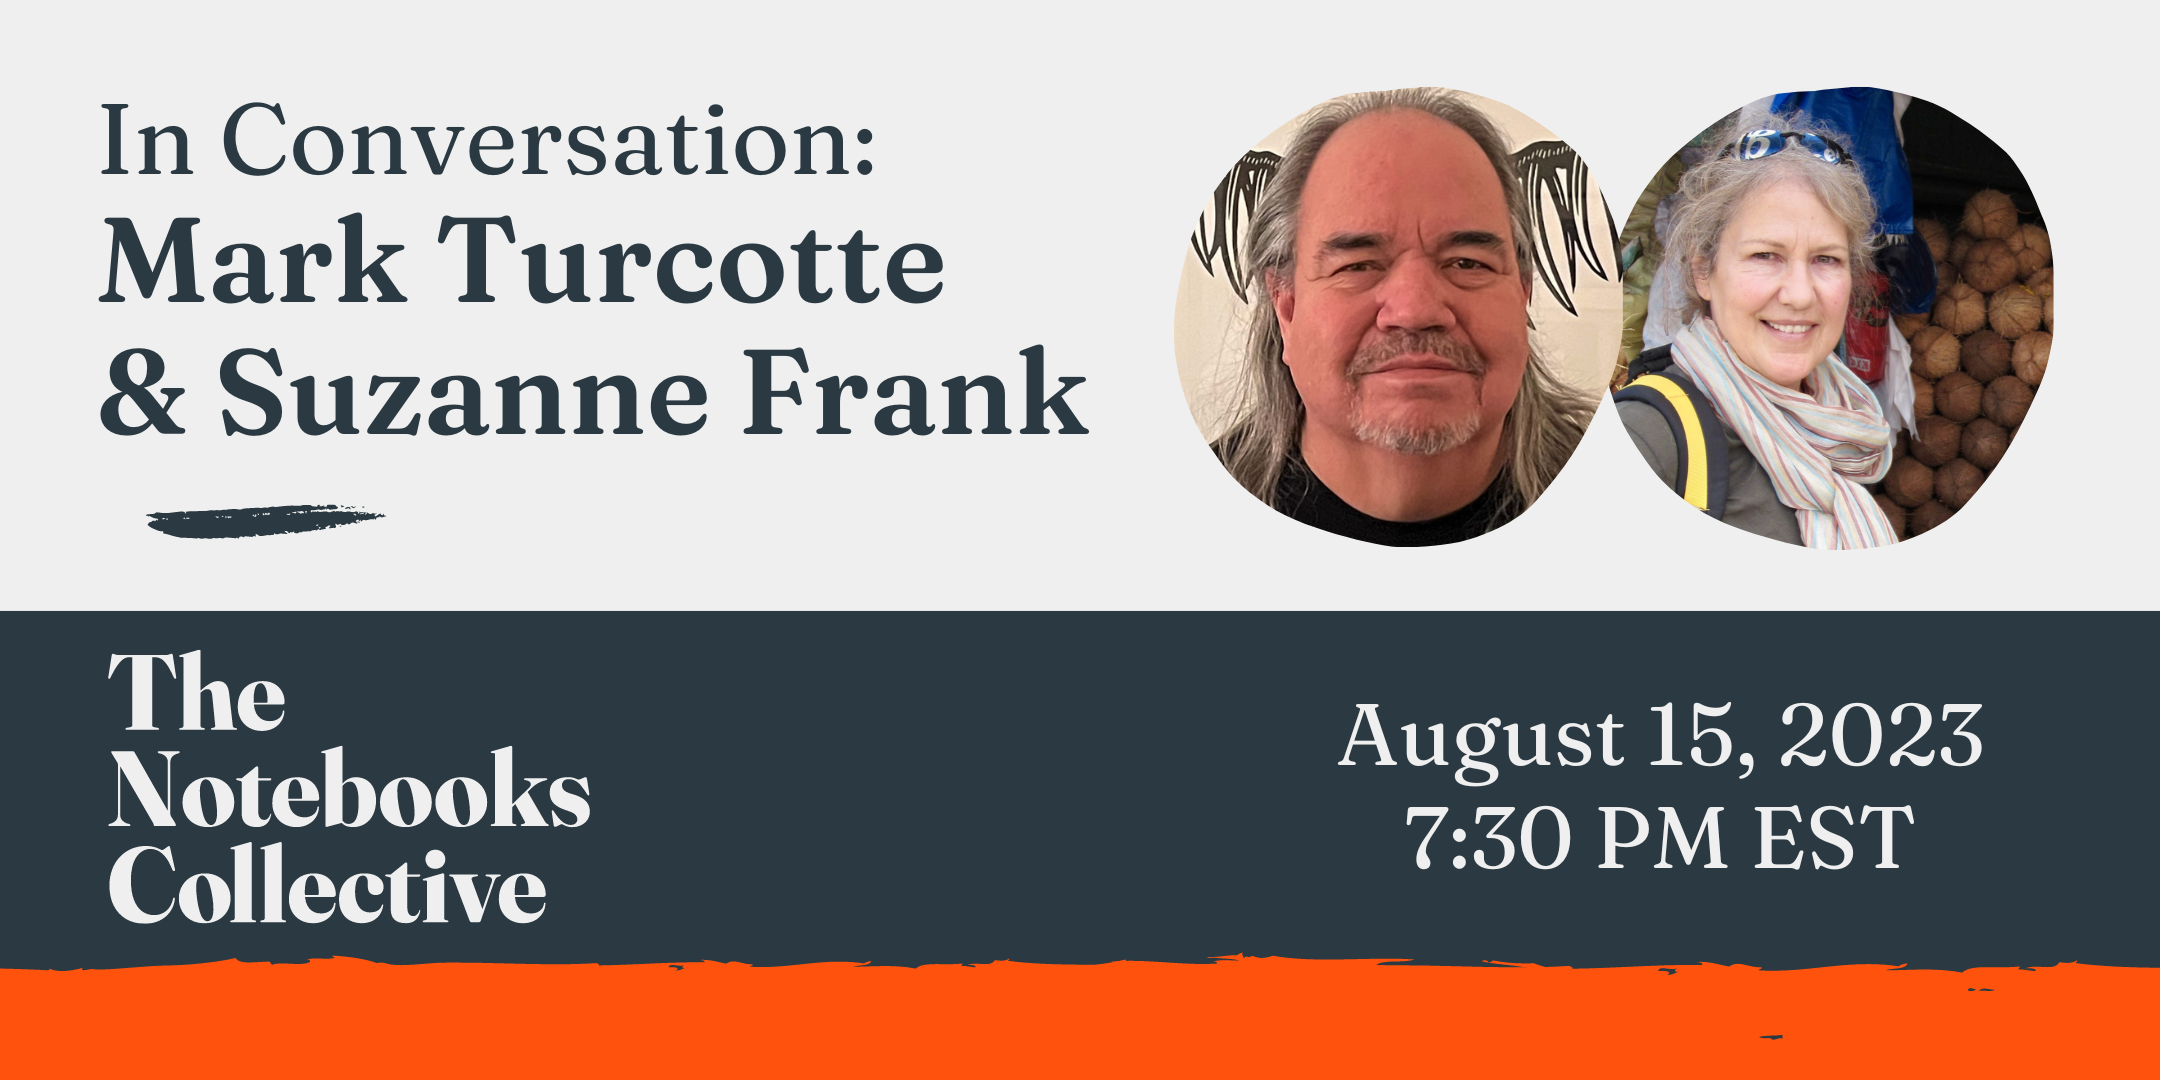 In Conversation: Mark Turcotte & Suzanne Frank